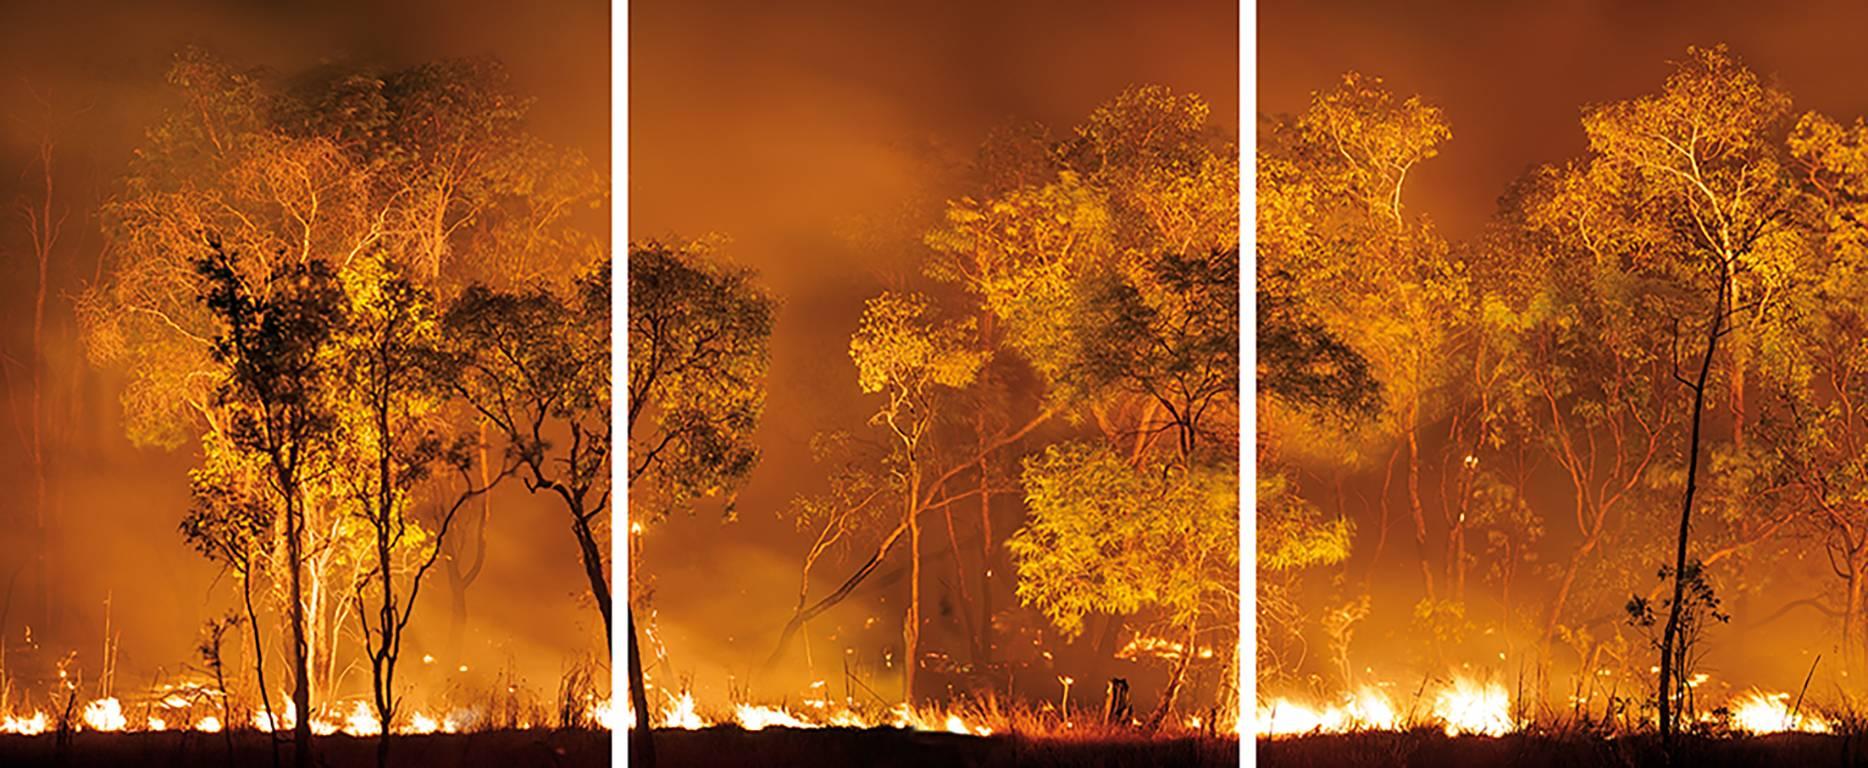 Bushfire Lit to Clear Land, Australia, 2008